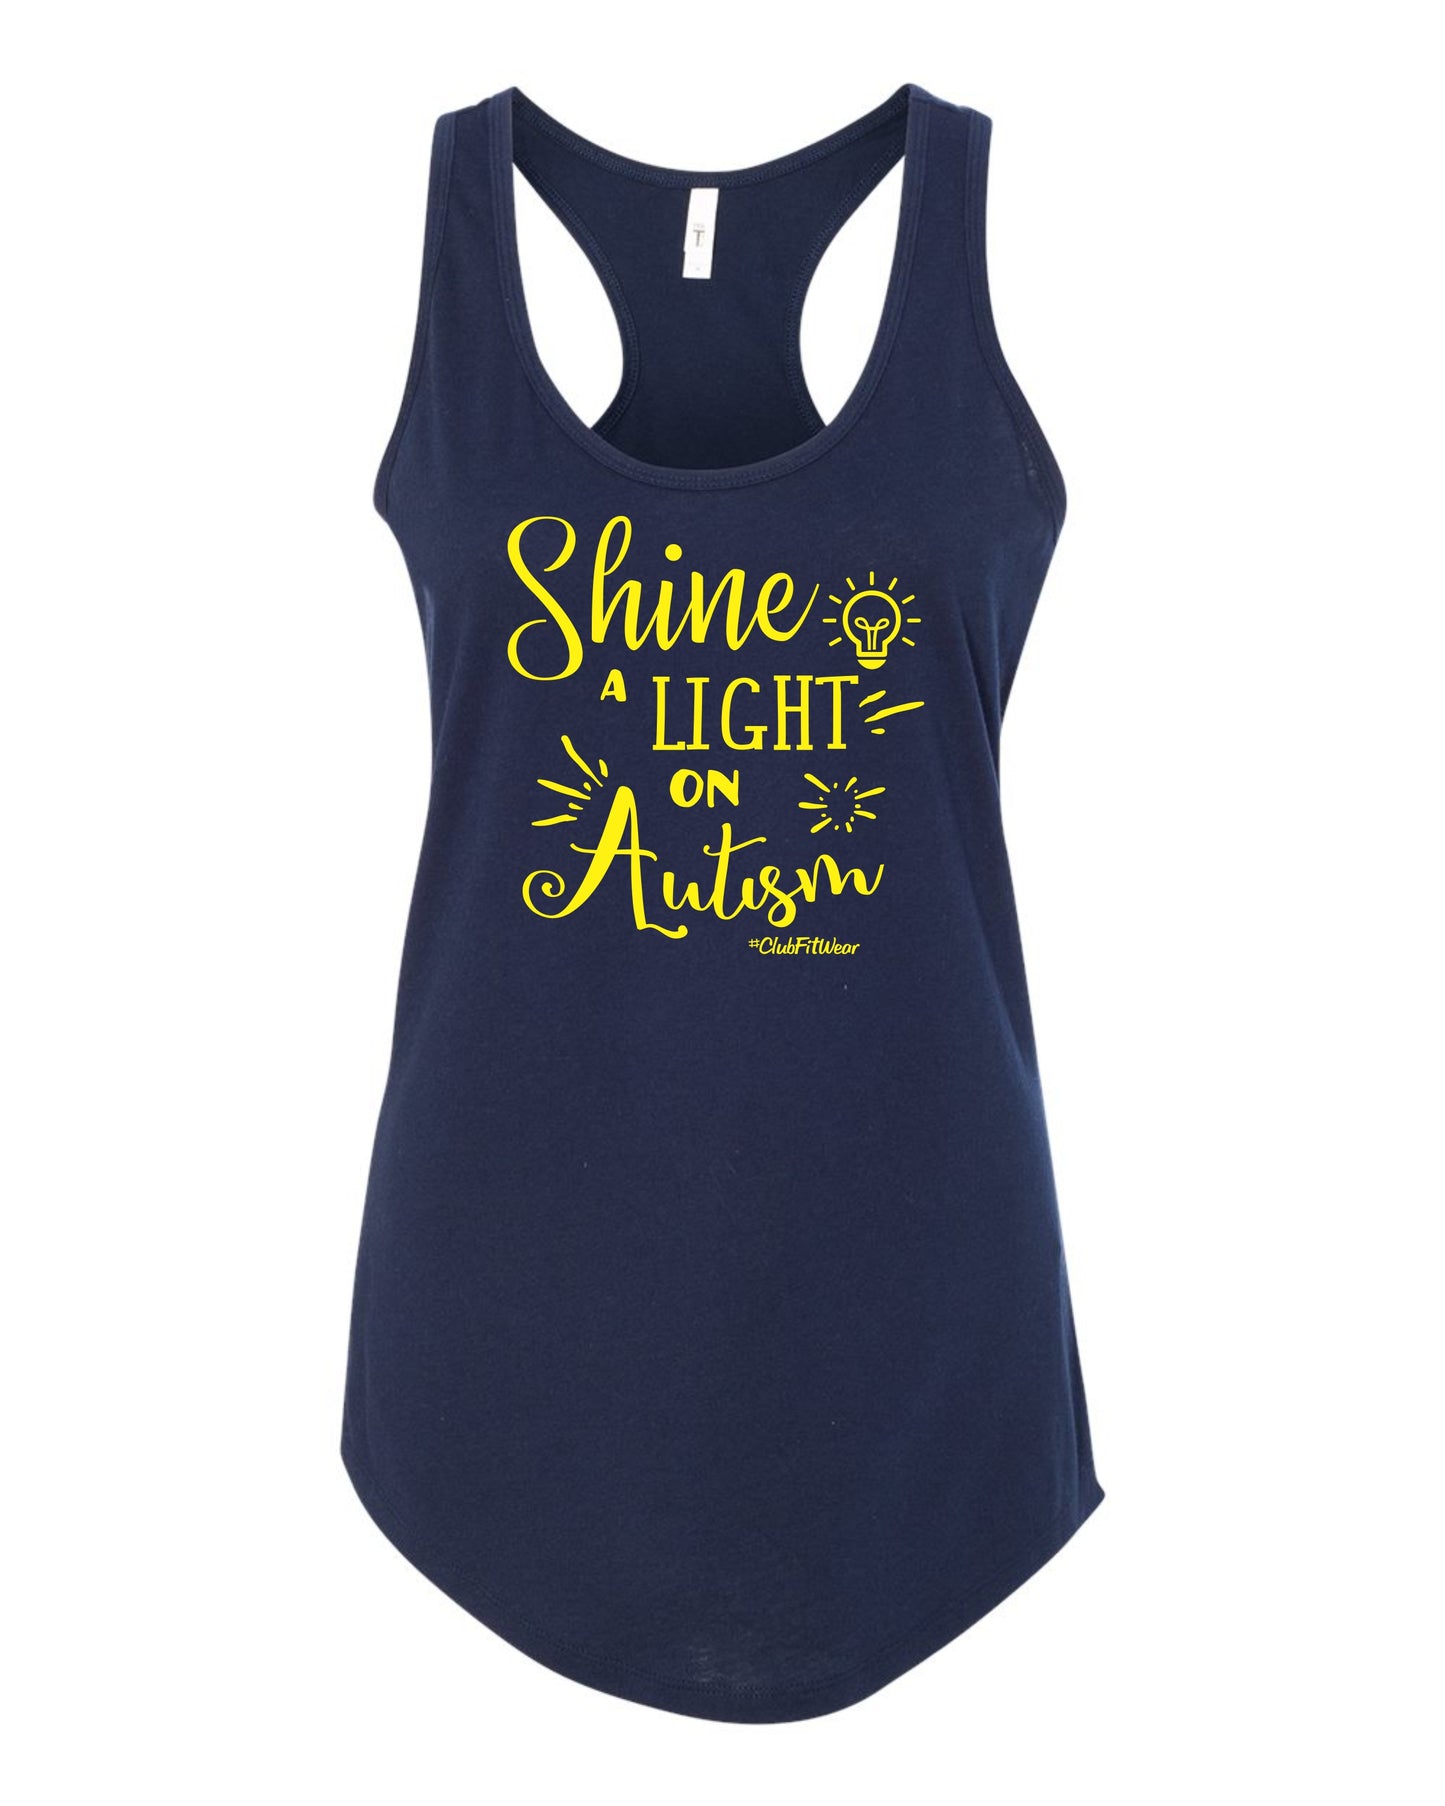 Shine a Light on Autism - Autism Awareness